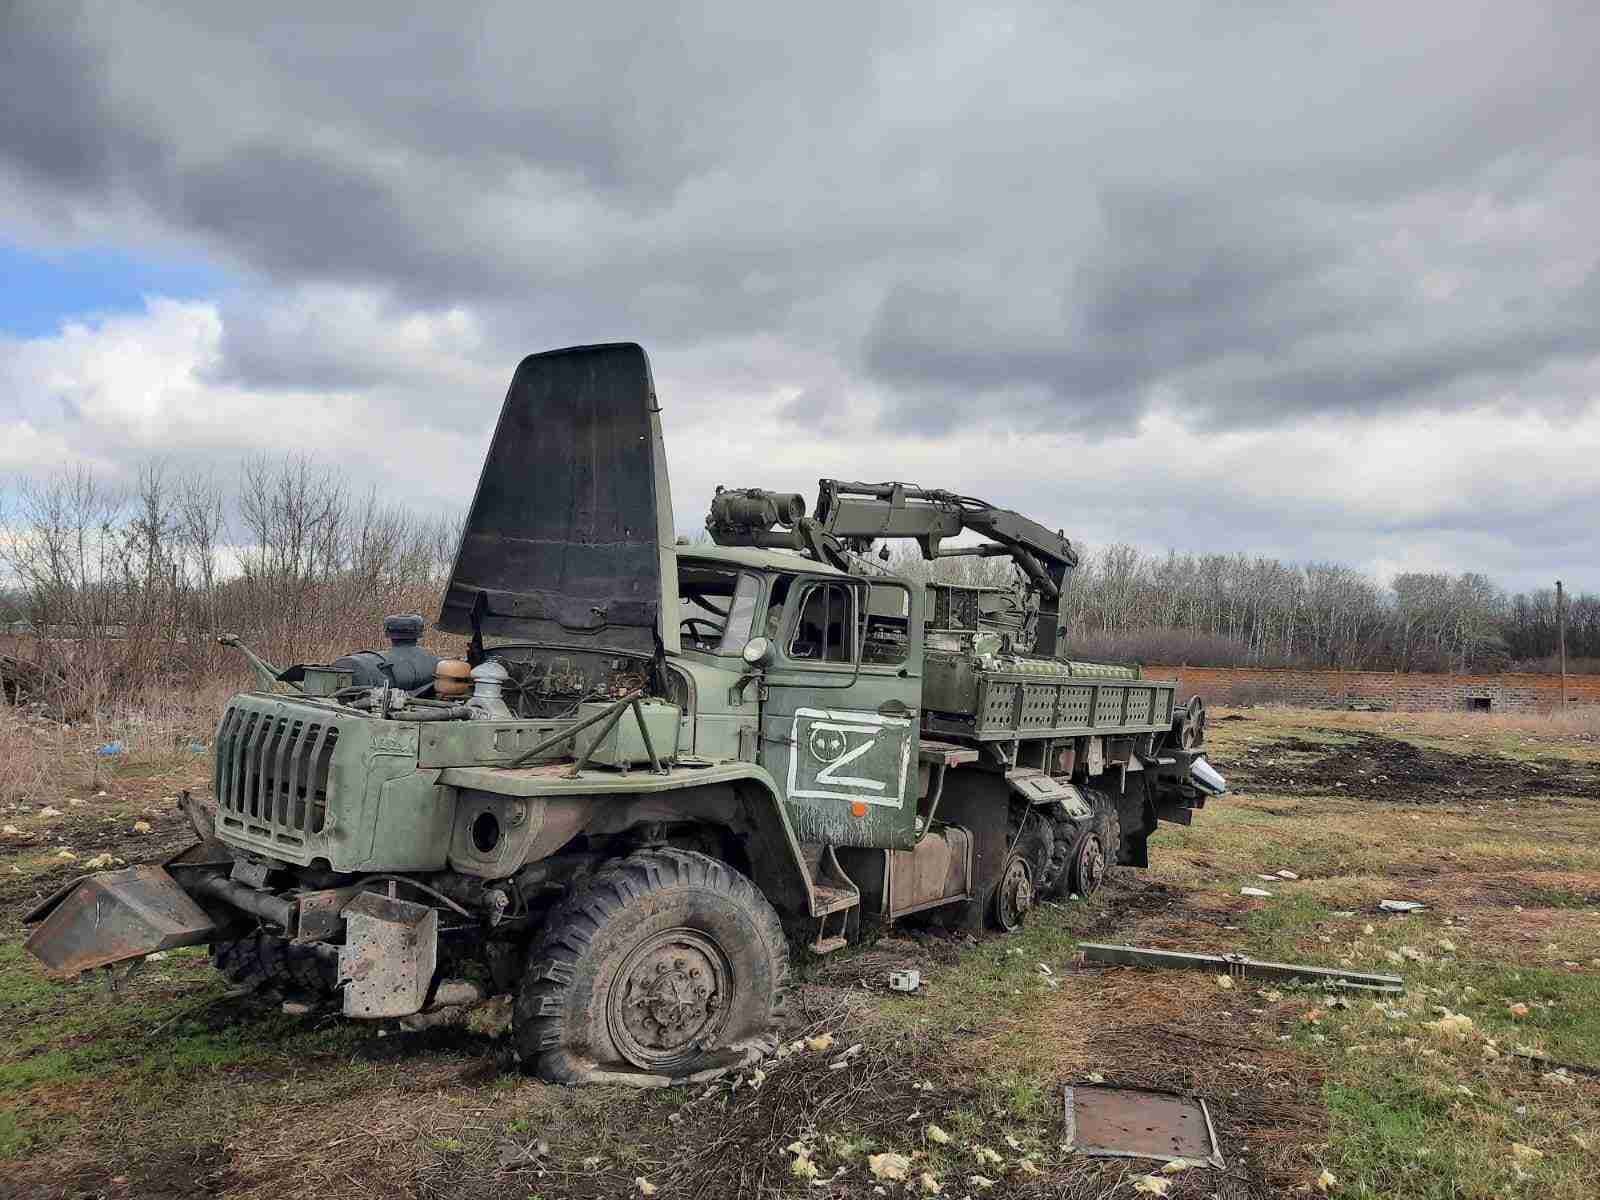 росія готує наступальну операцію на сході України - Генштаб ЗСУ